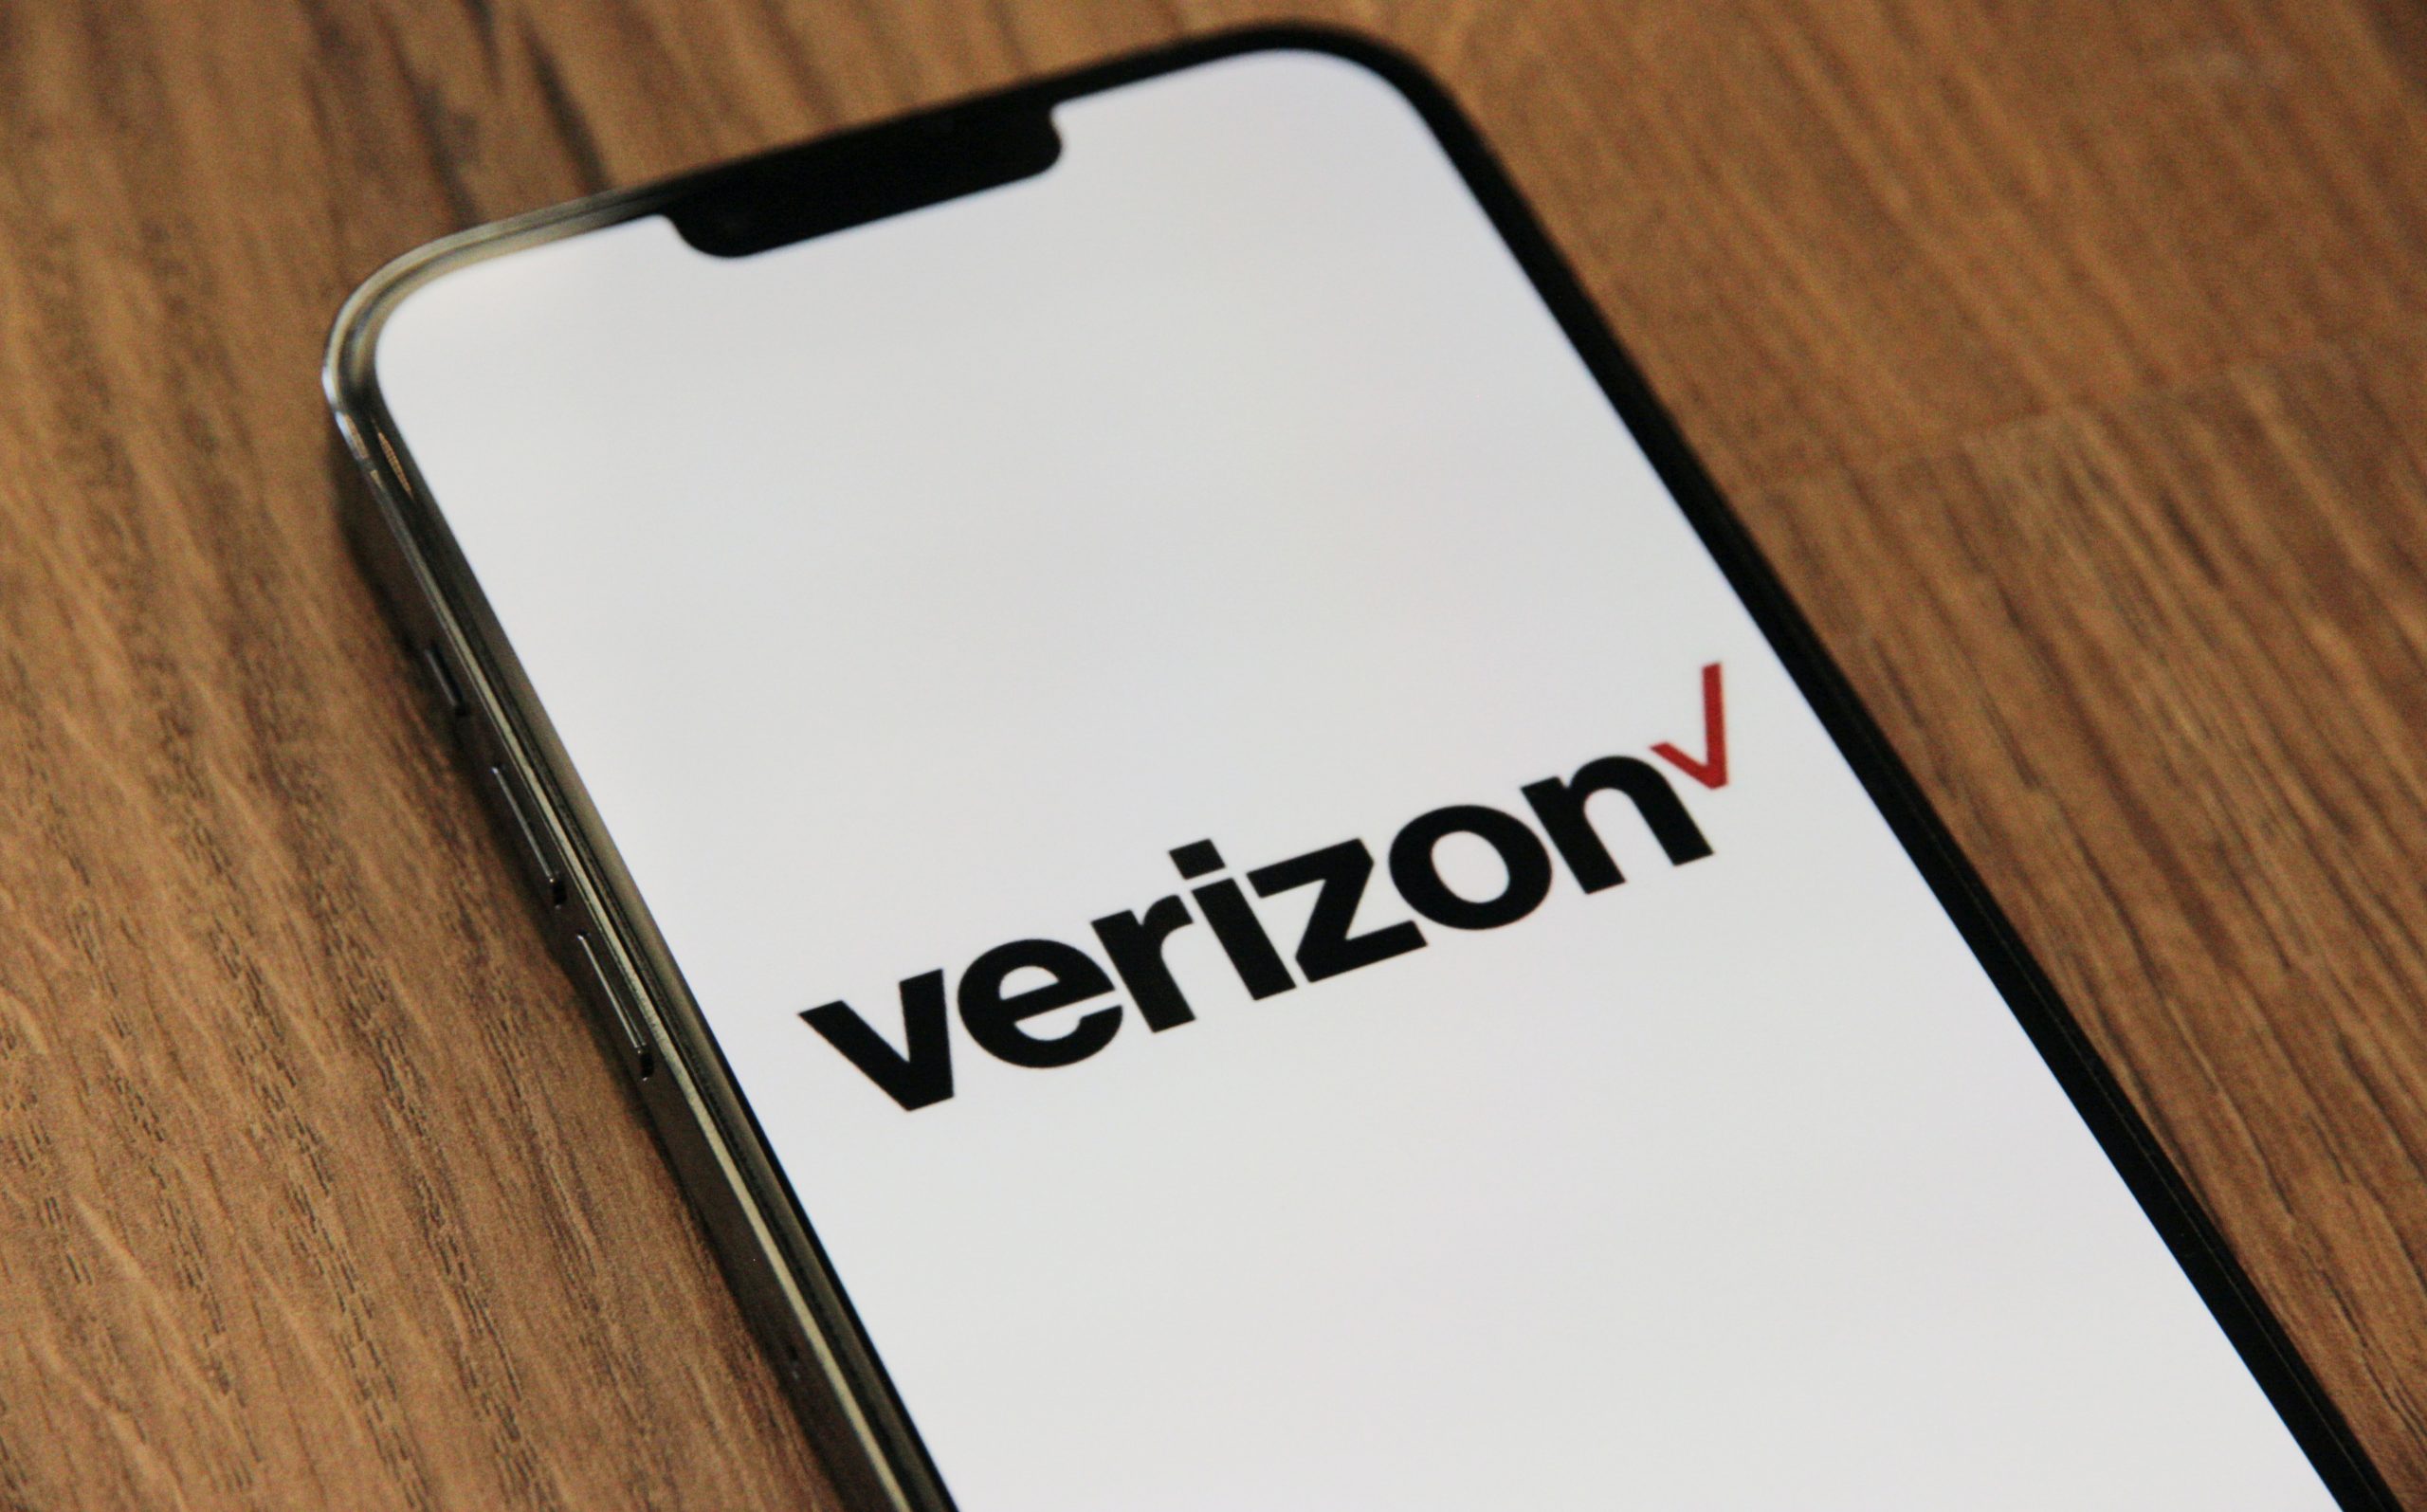 Verizon logo smartphone